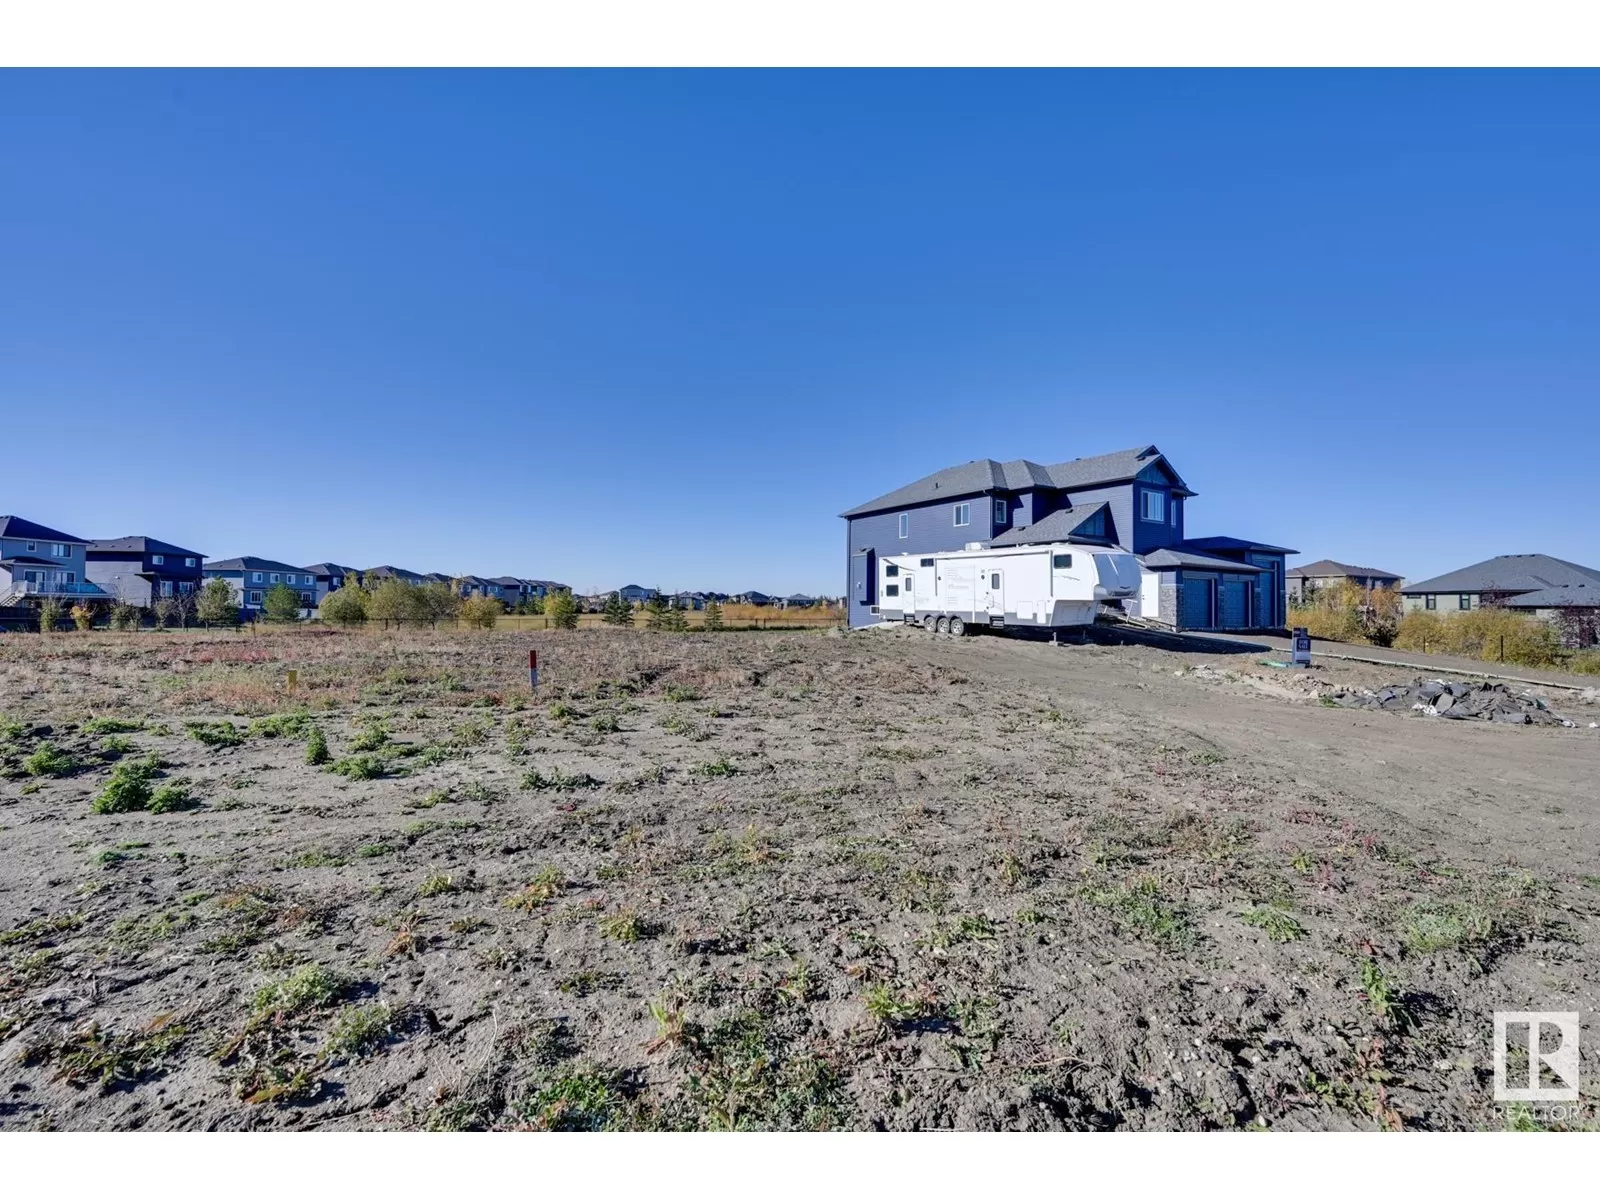 No Building for rent: 69 Greenfield Bn, Fort Saskatchewan, Alberta T8L 0K3